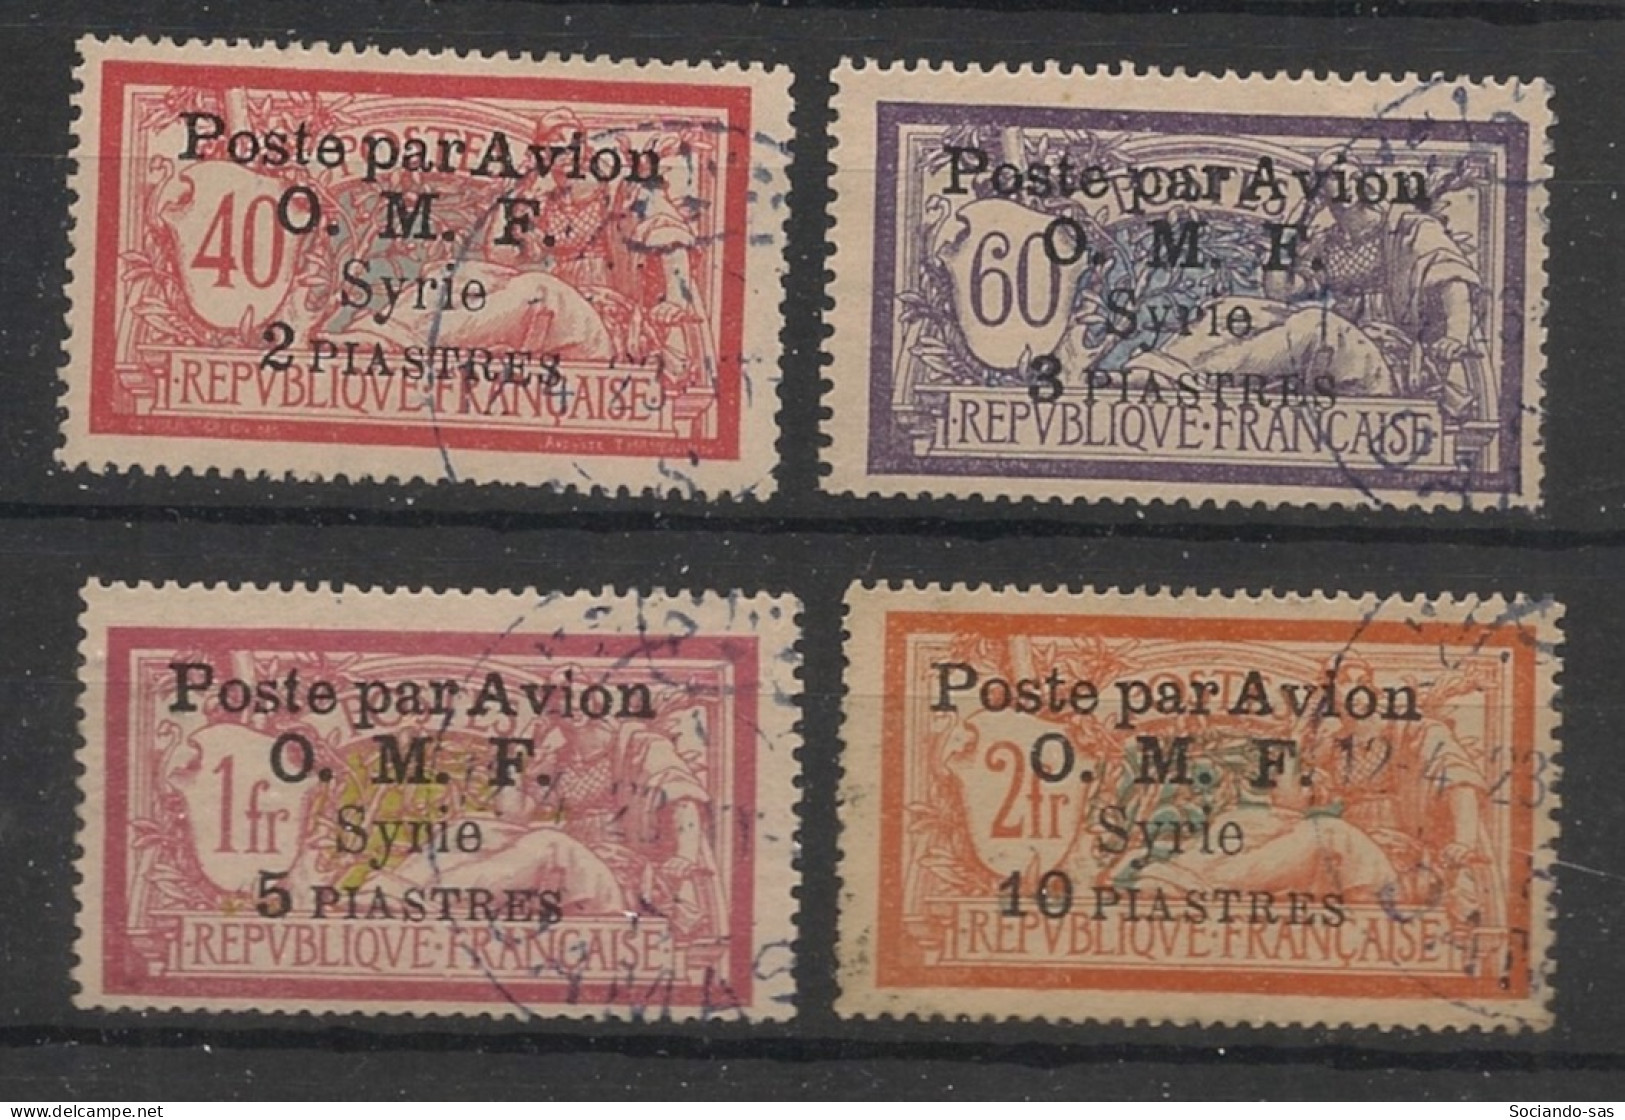 SYRIE - 1922 - PA N°YT. 10 à 13 - Série Complète - Oblitéré / Used - Used Stamps